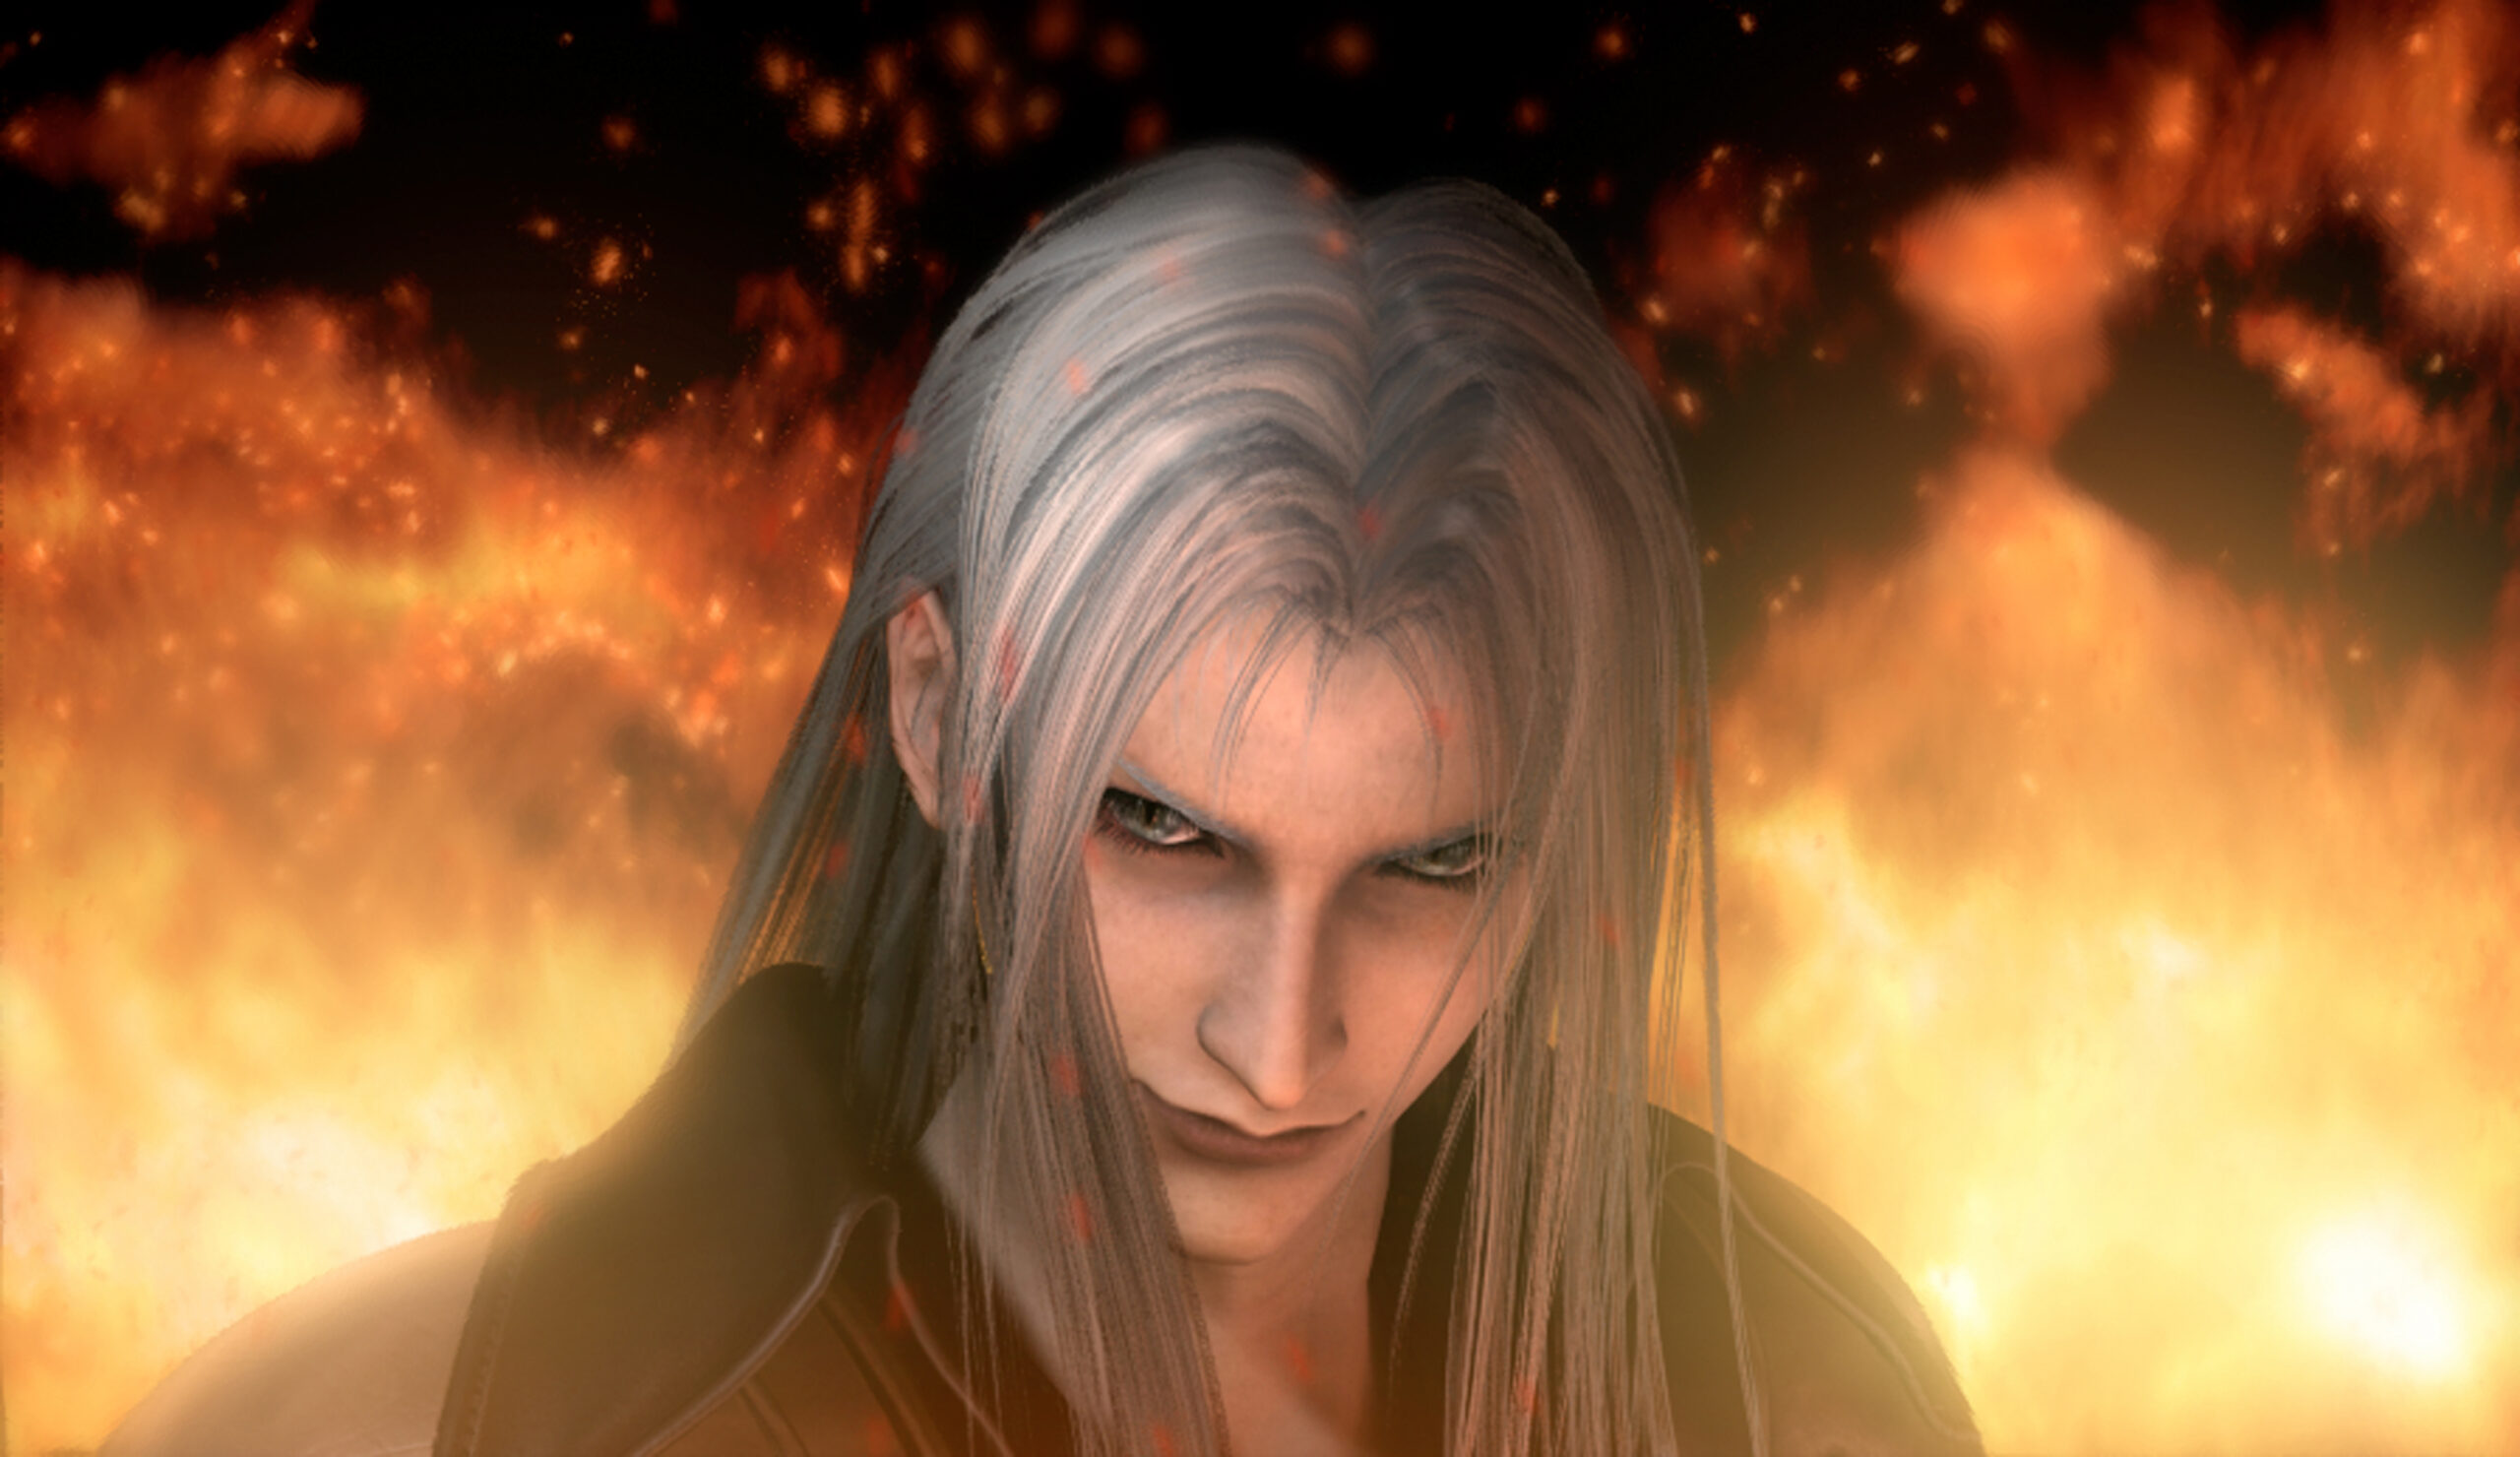 Final Fantasy VII: Advent Children - Fathom Events